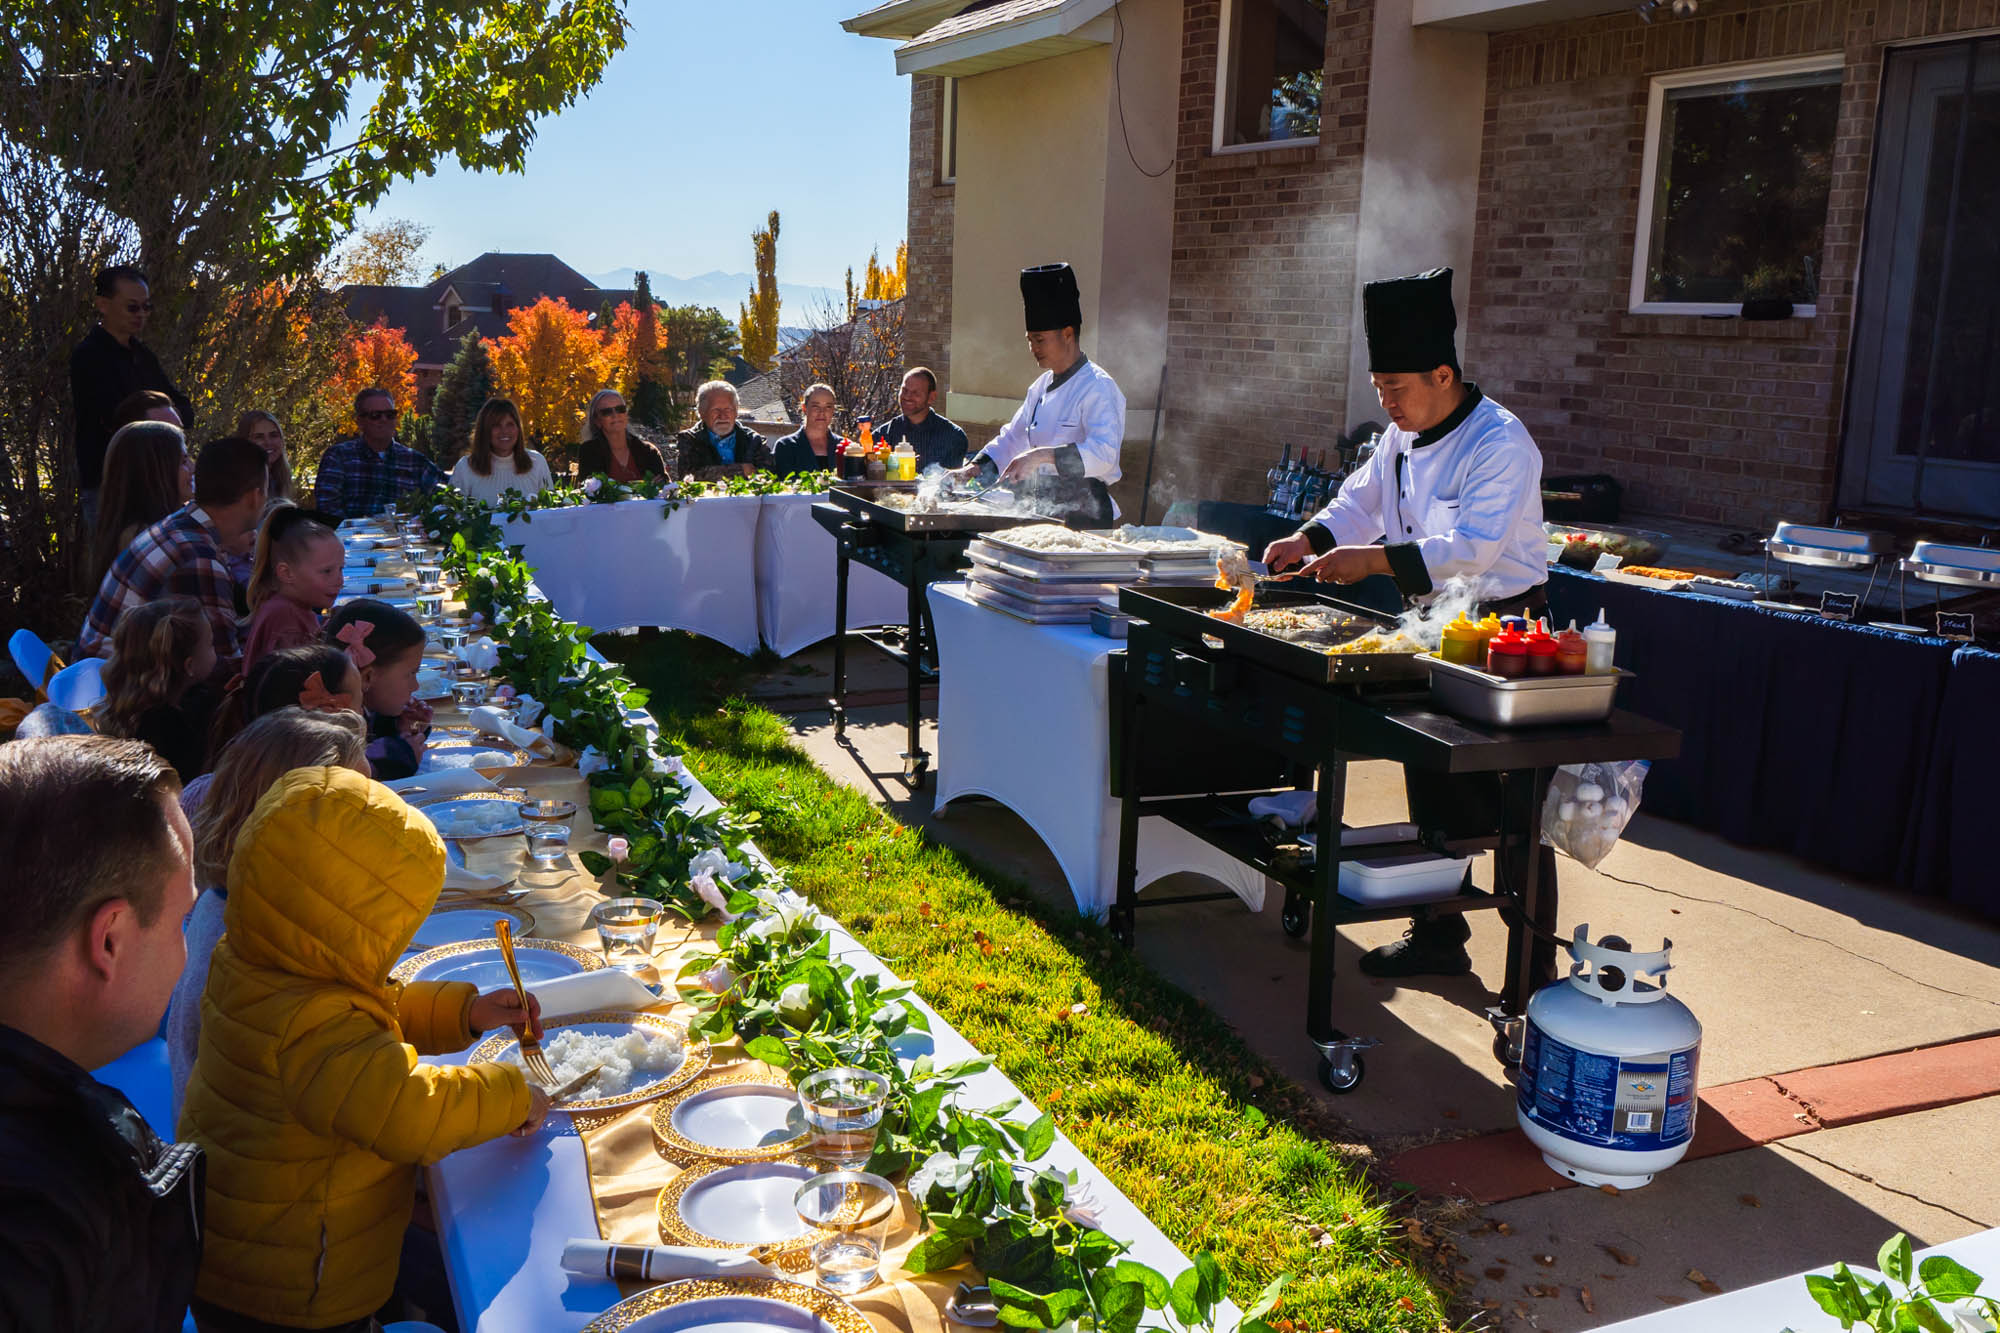 Outdoors, chefs preparing food